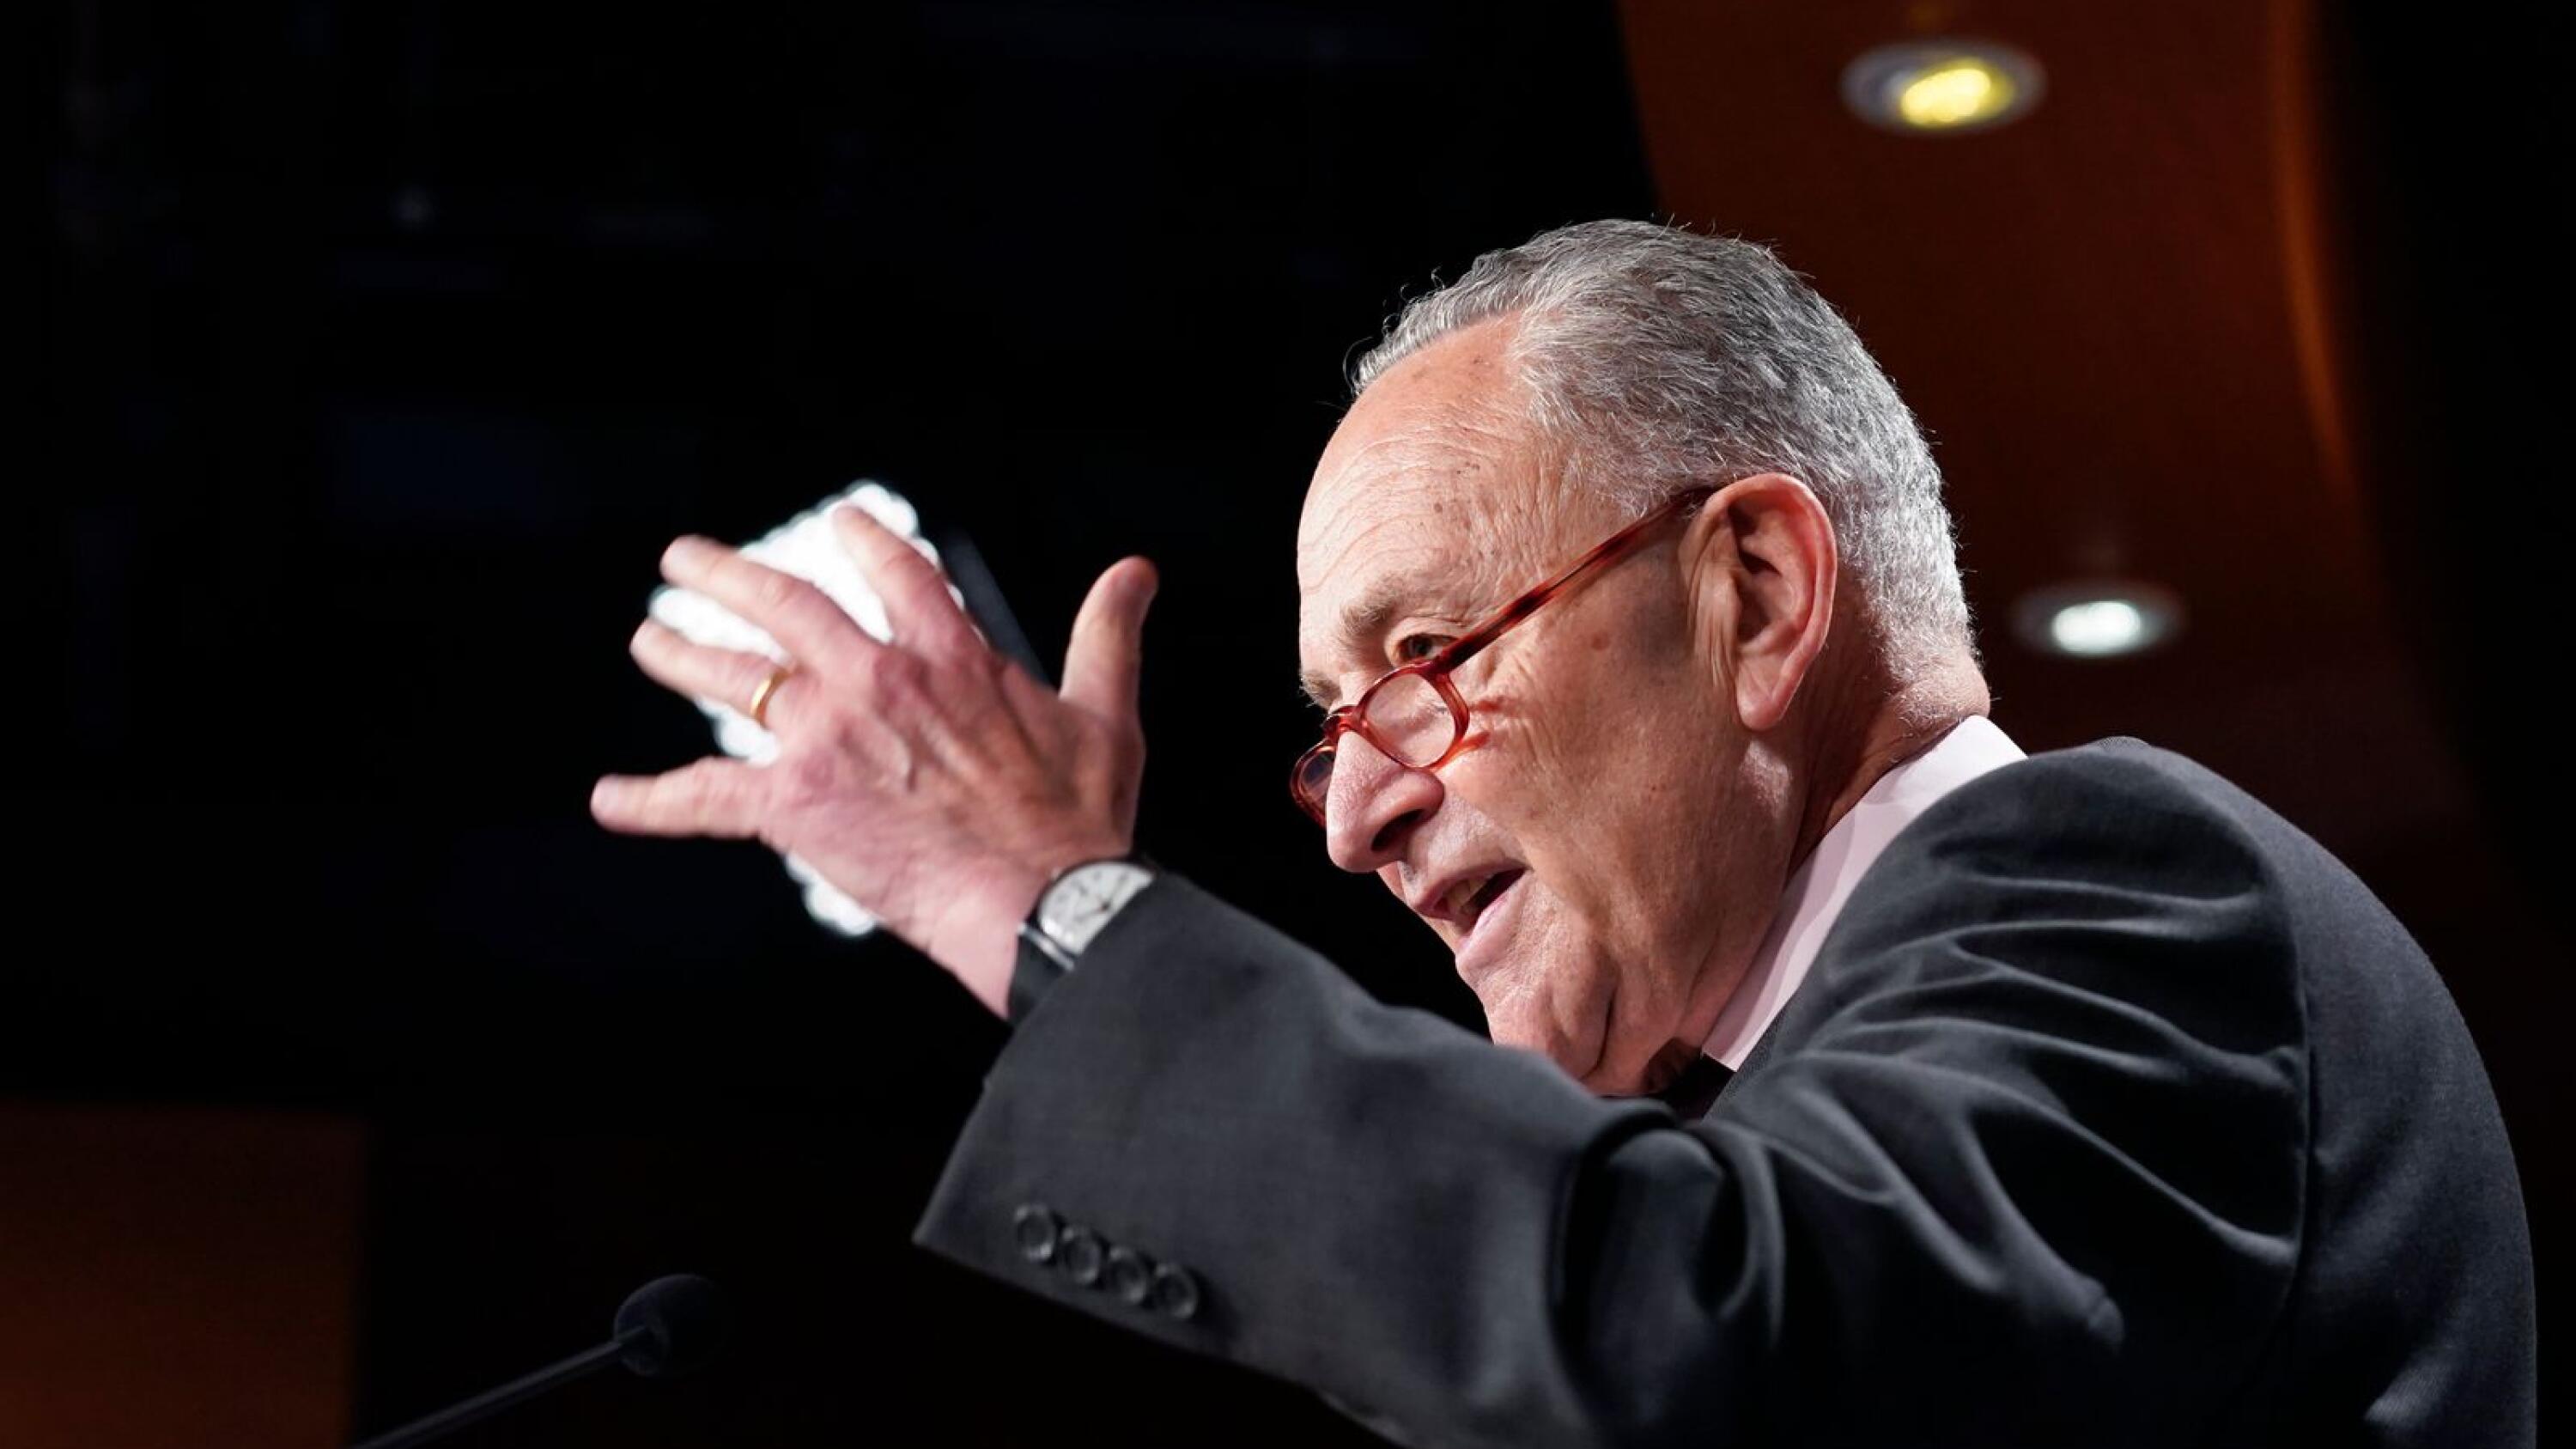 Dems' climate, energy, tax bill clears initial Senate hurdle